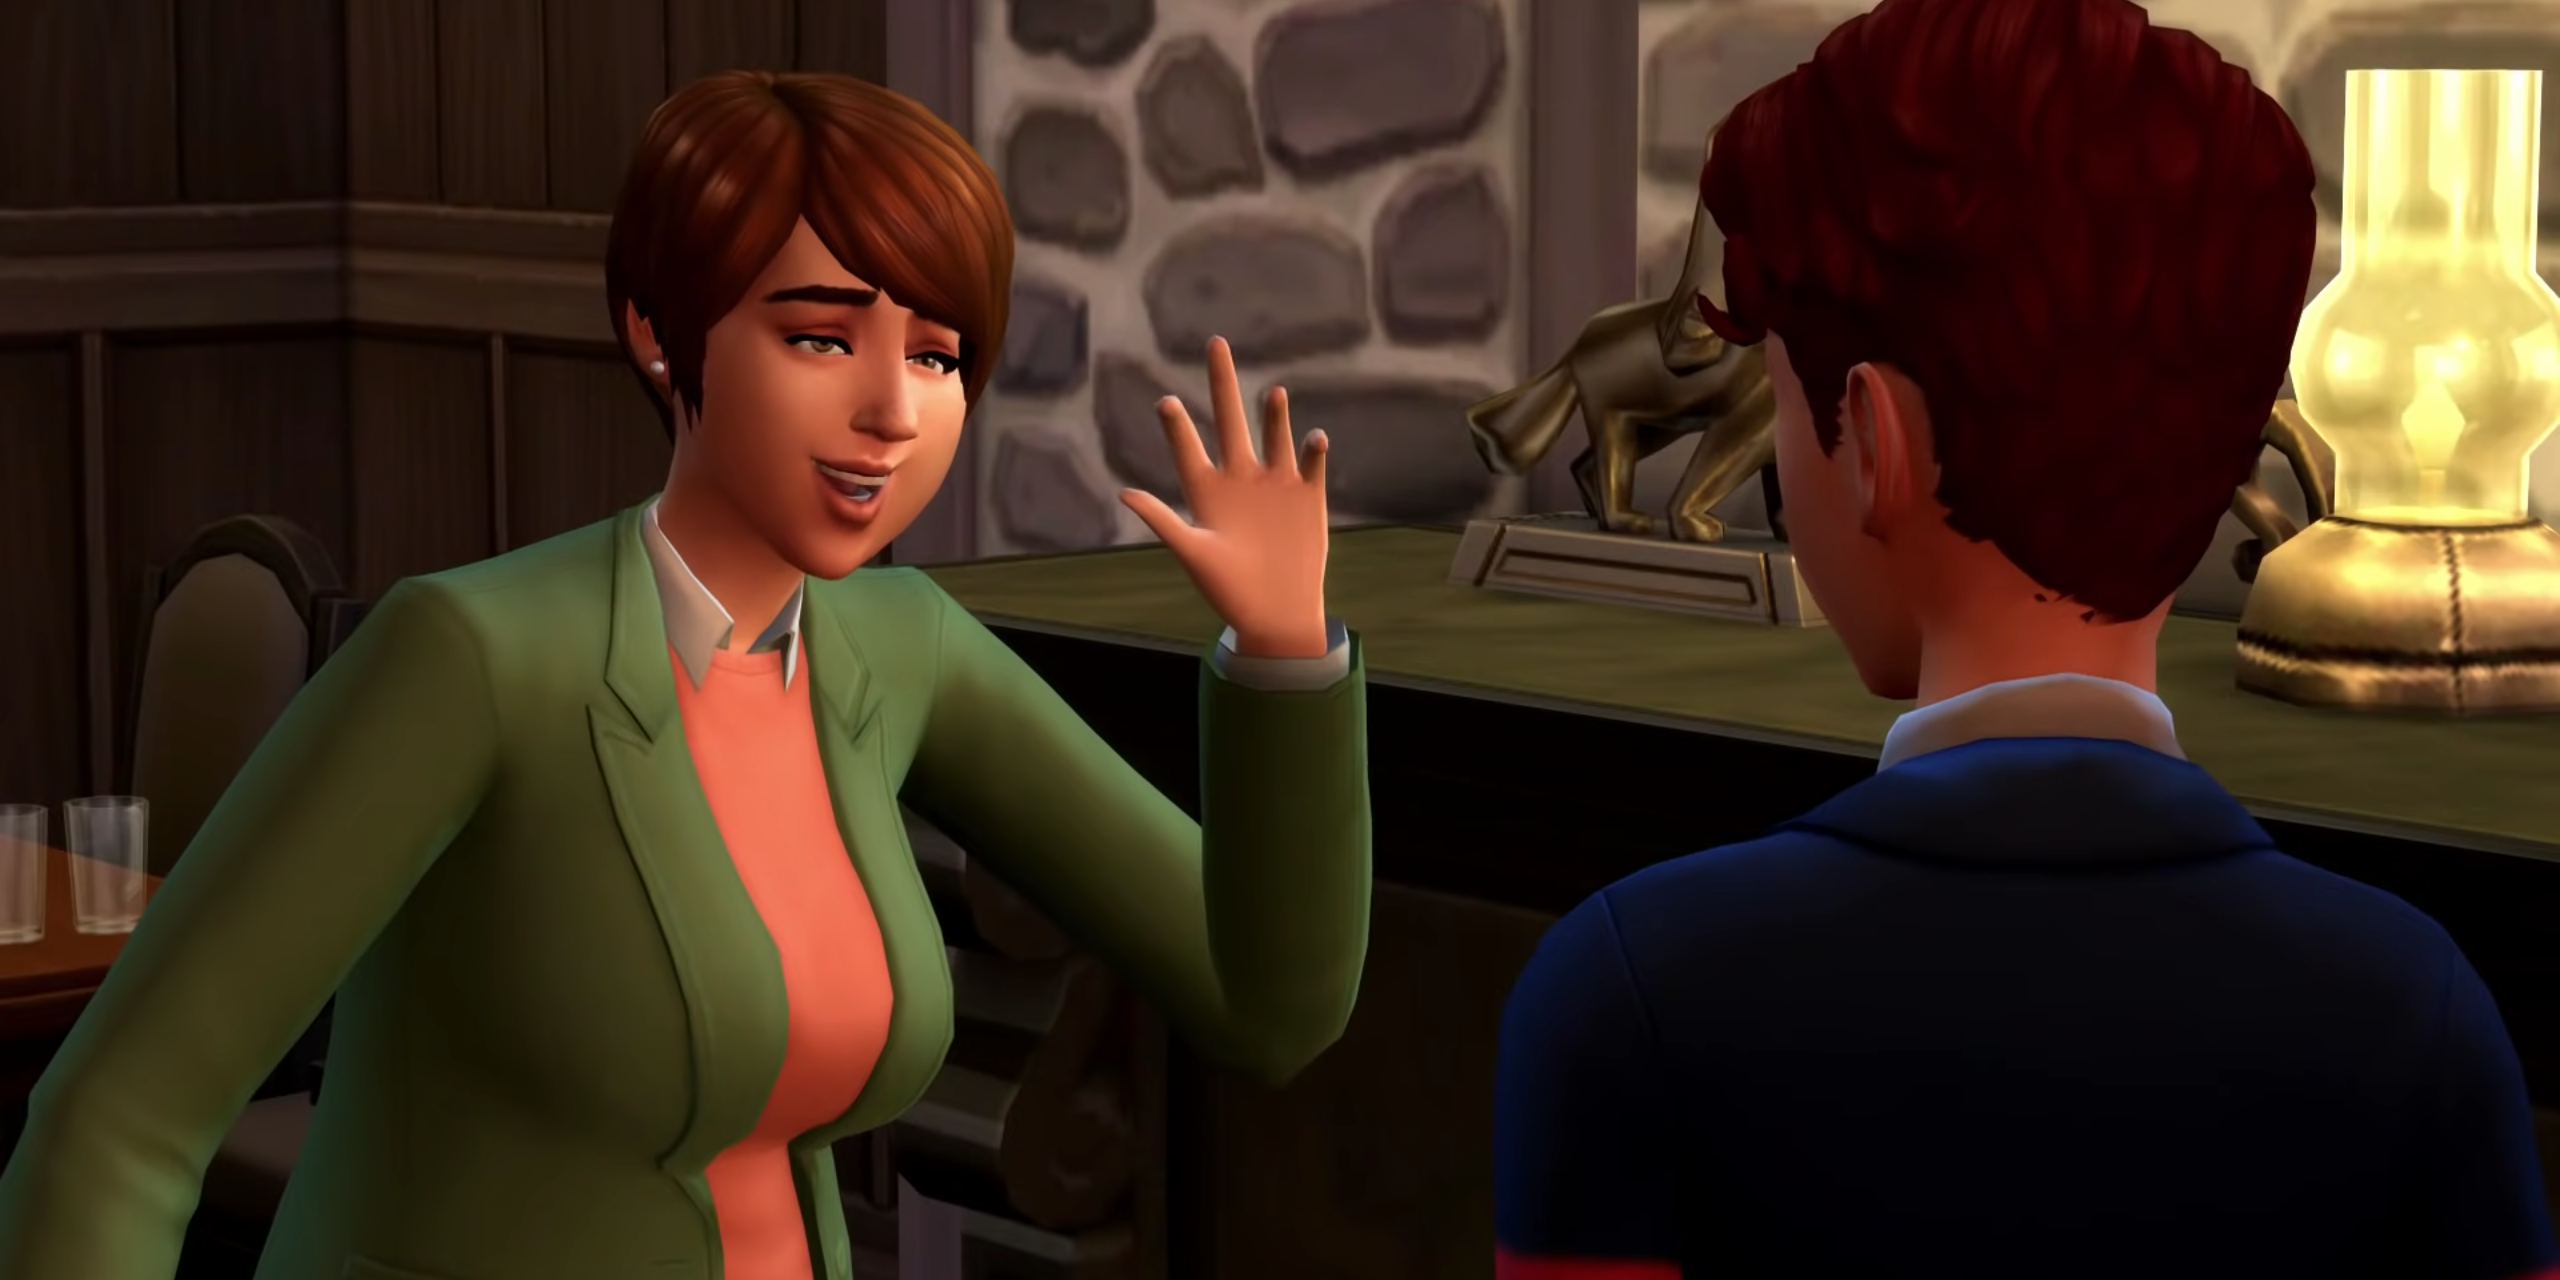 A Sim gives someone a flirty greeting